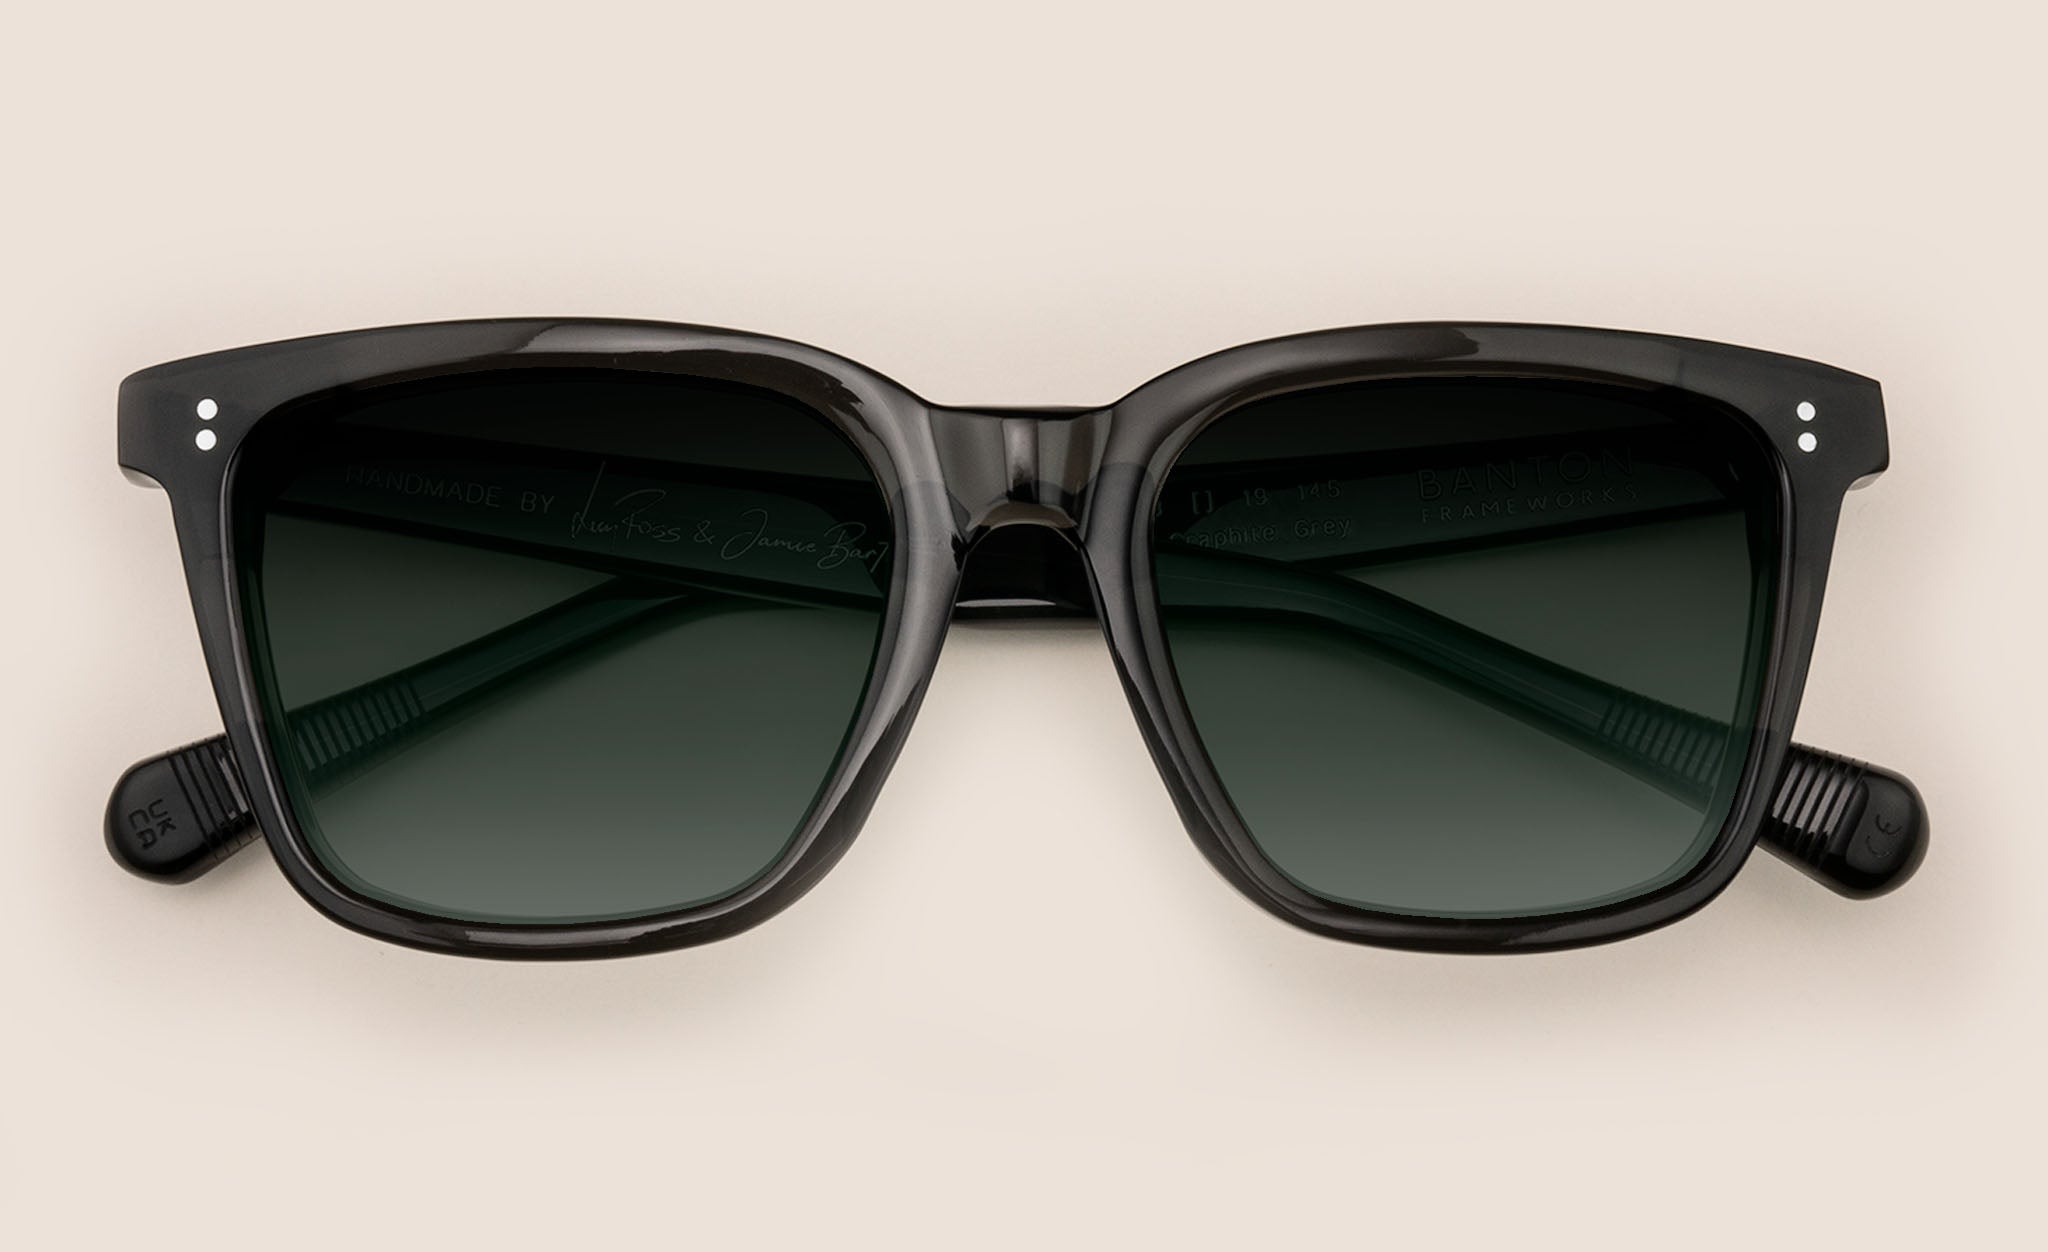 Large square dark grey sunglasses frame